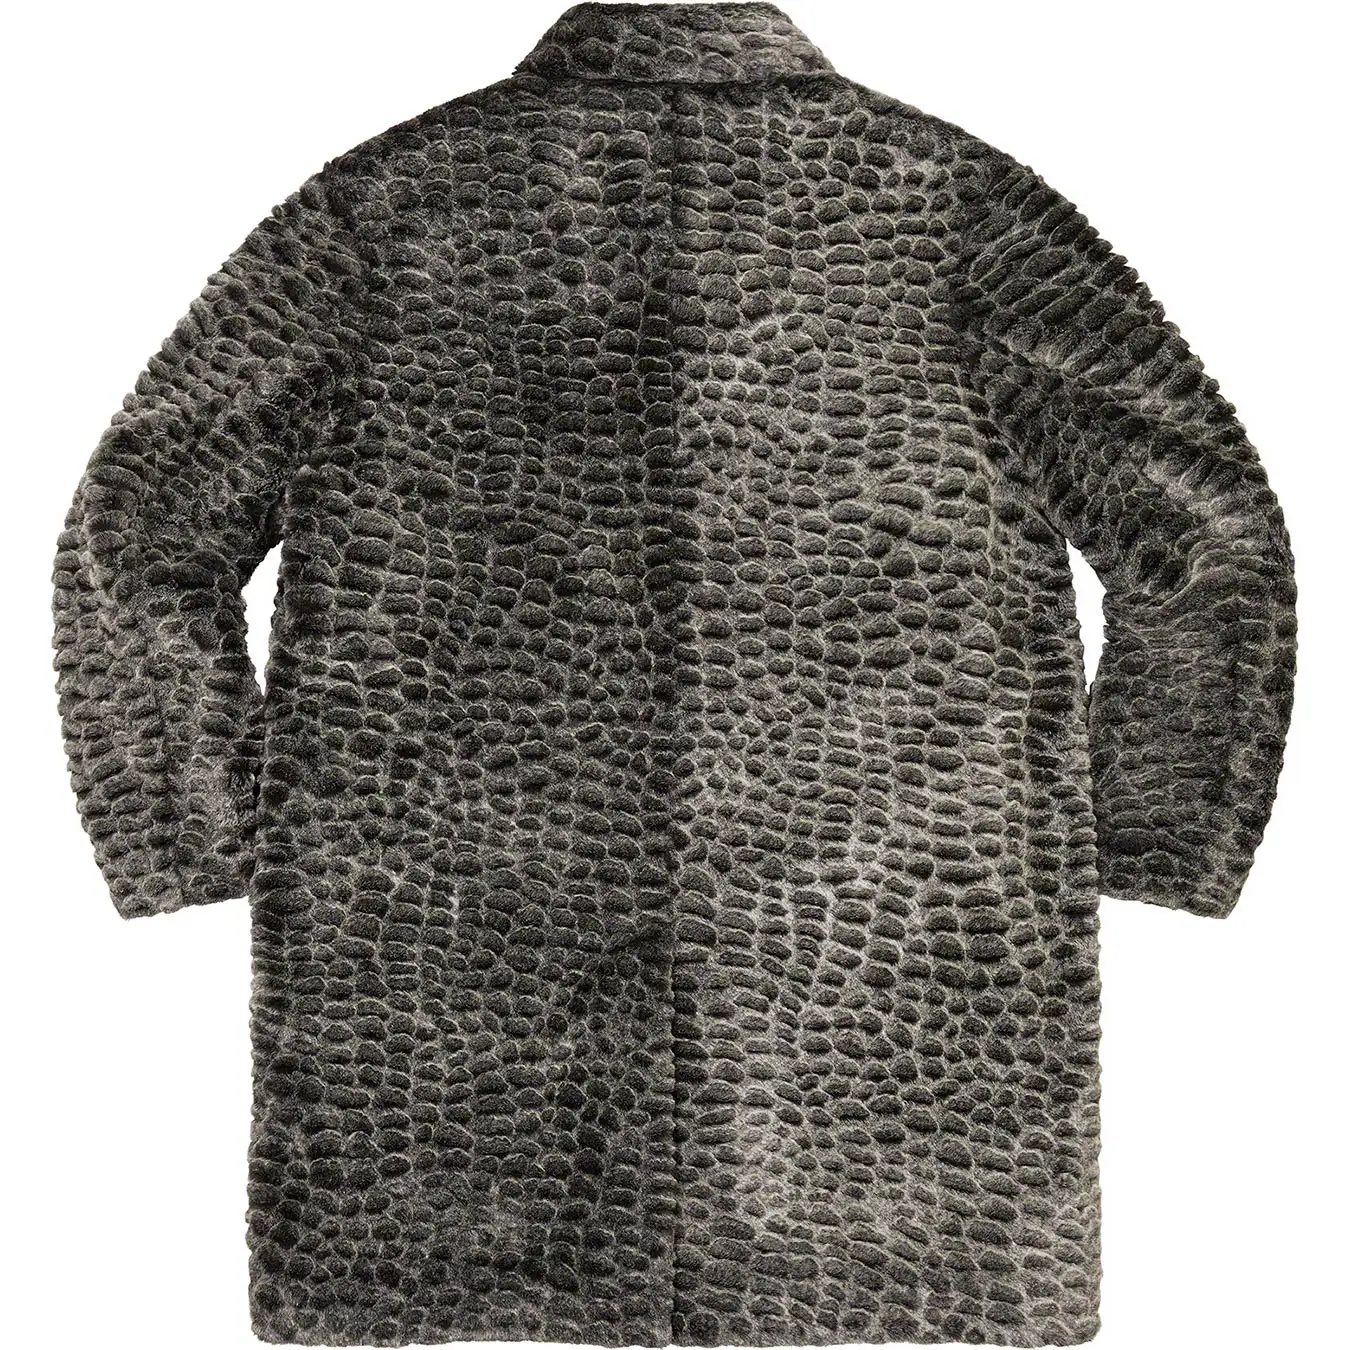 Supreme Croc Faux Fur Overcoat